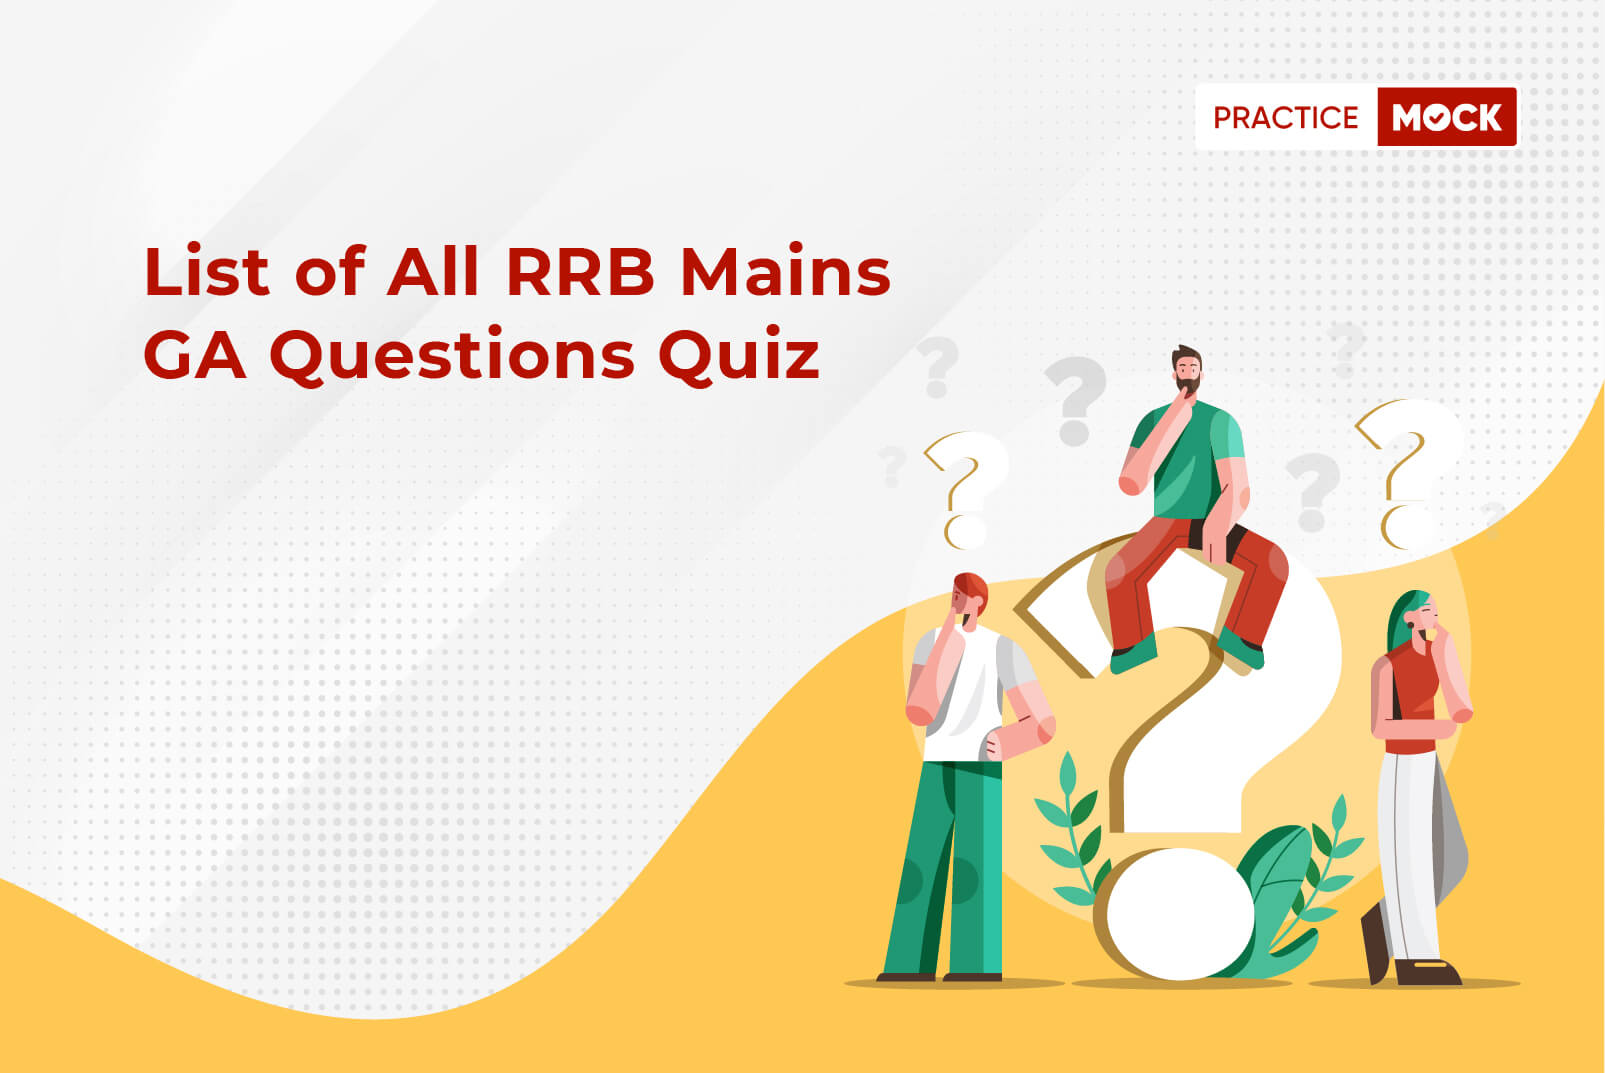 List of all RRB Clerk Mains GA Exam Questions Quiz (1)